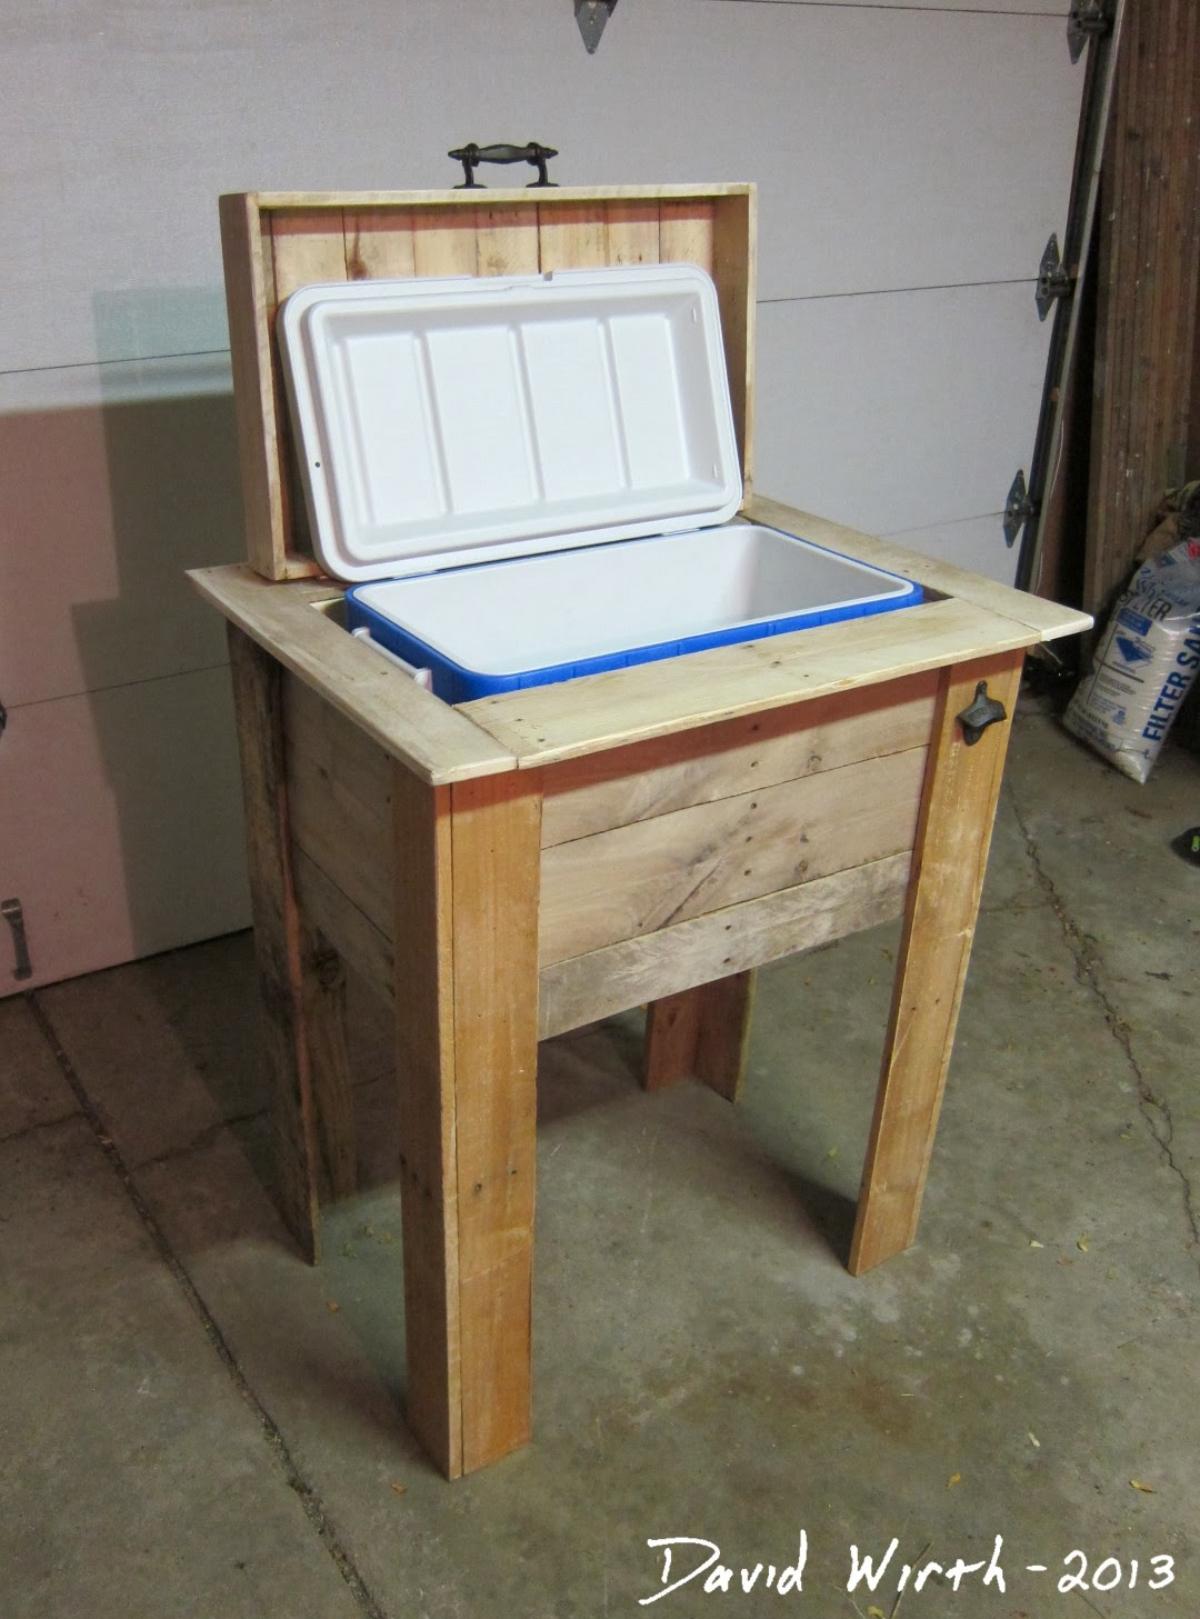 Wood Pallet- Rustic Outdoor Cooler Stand